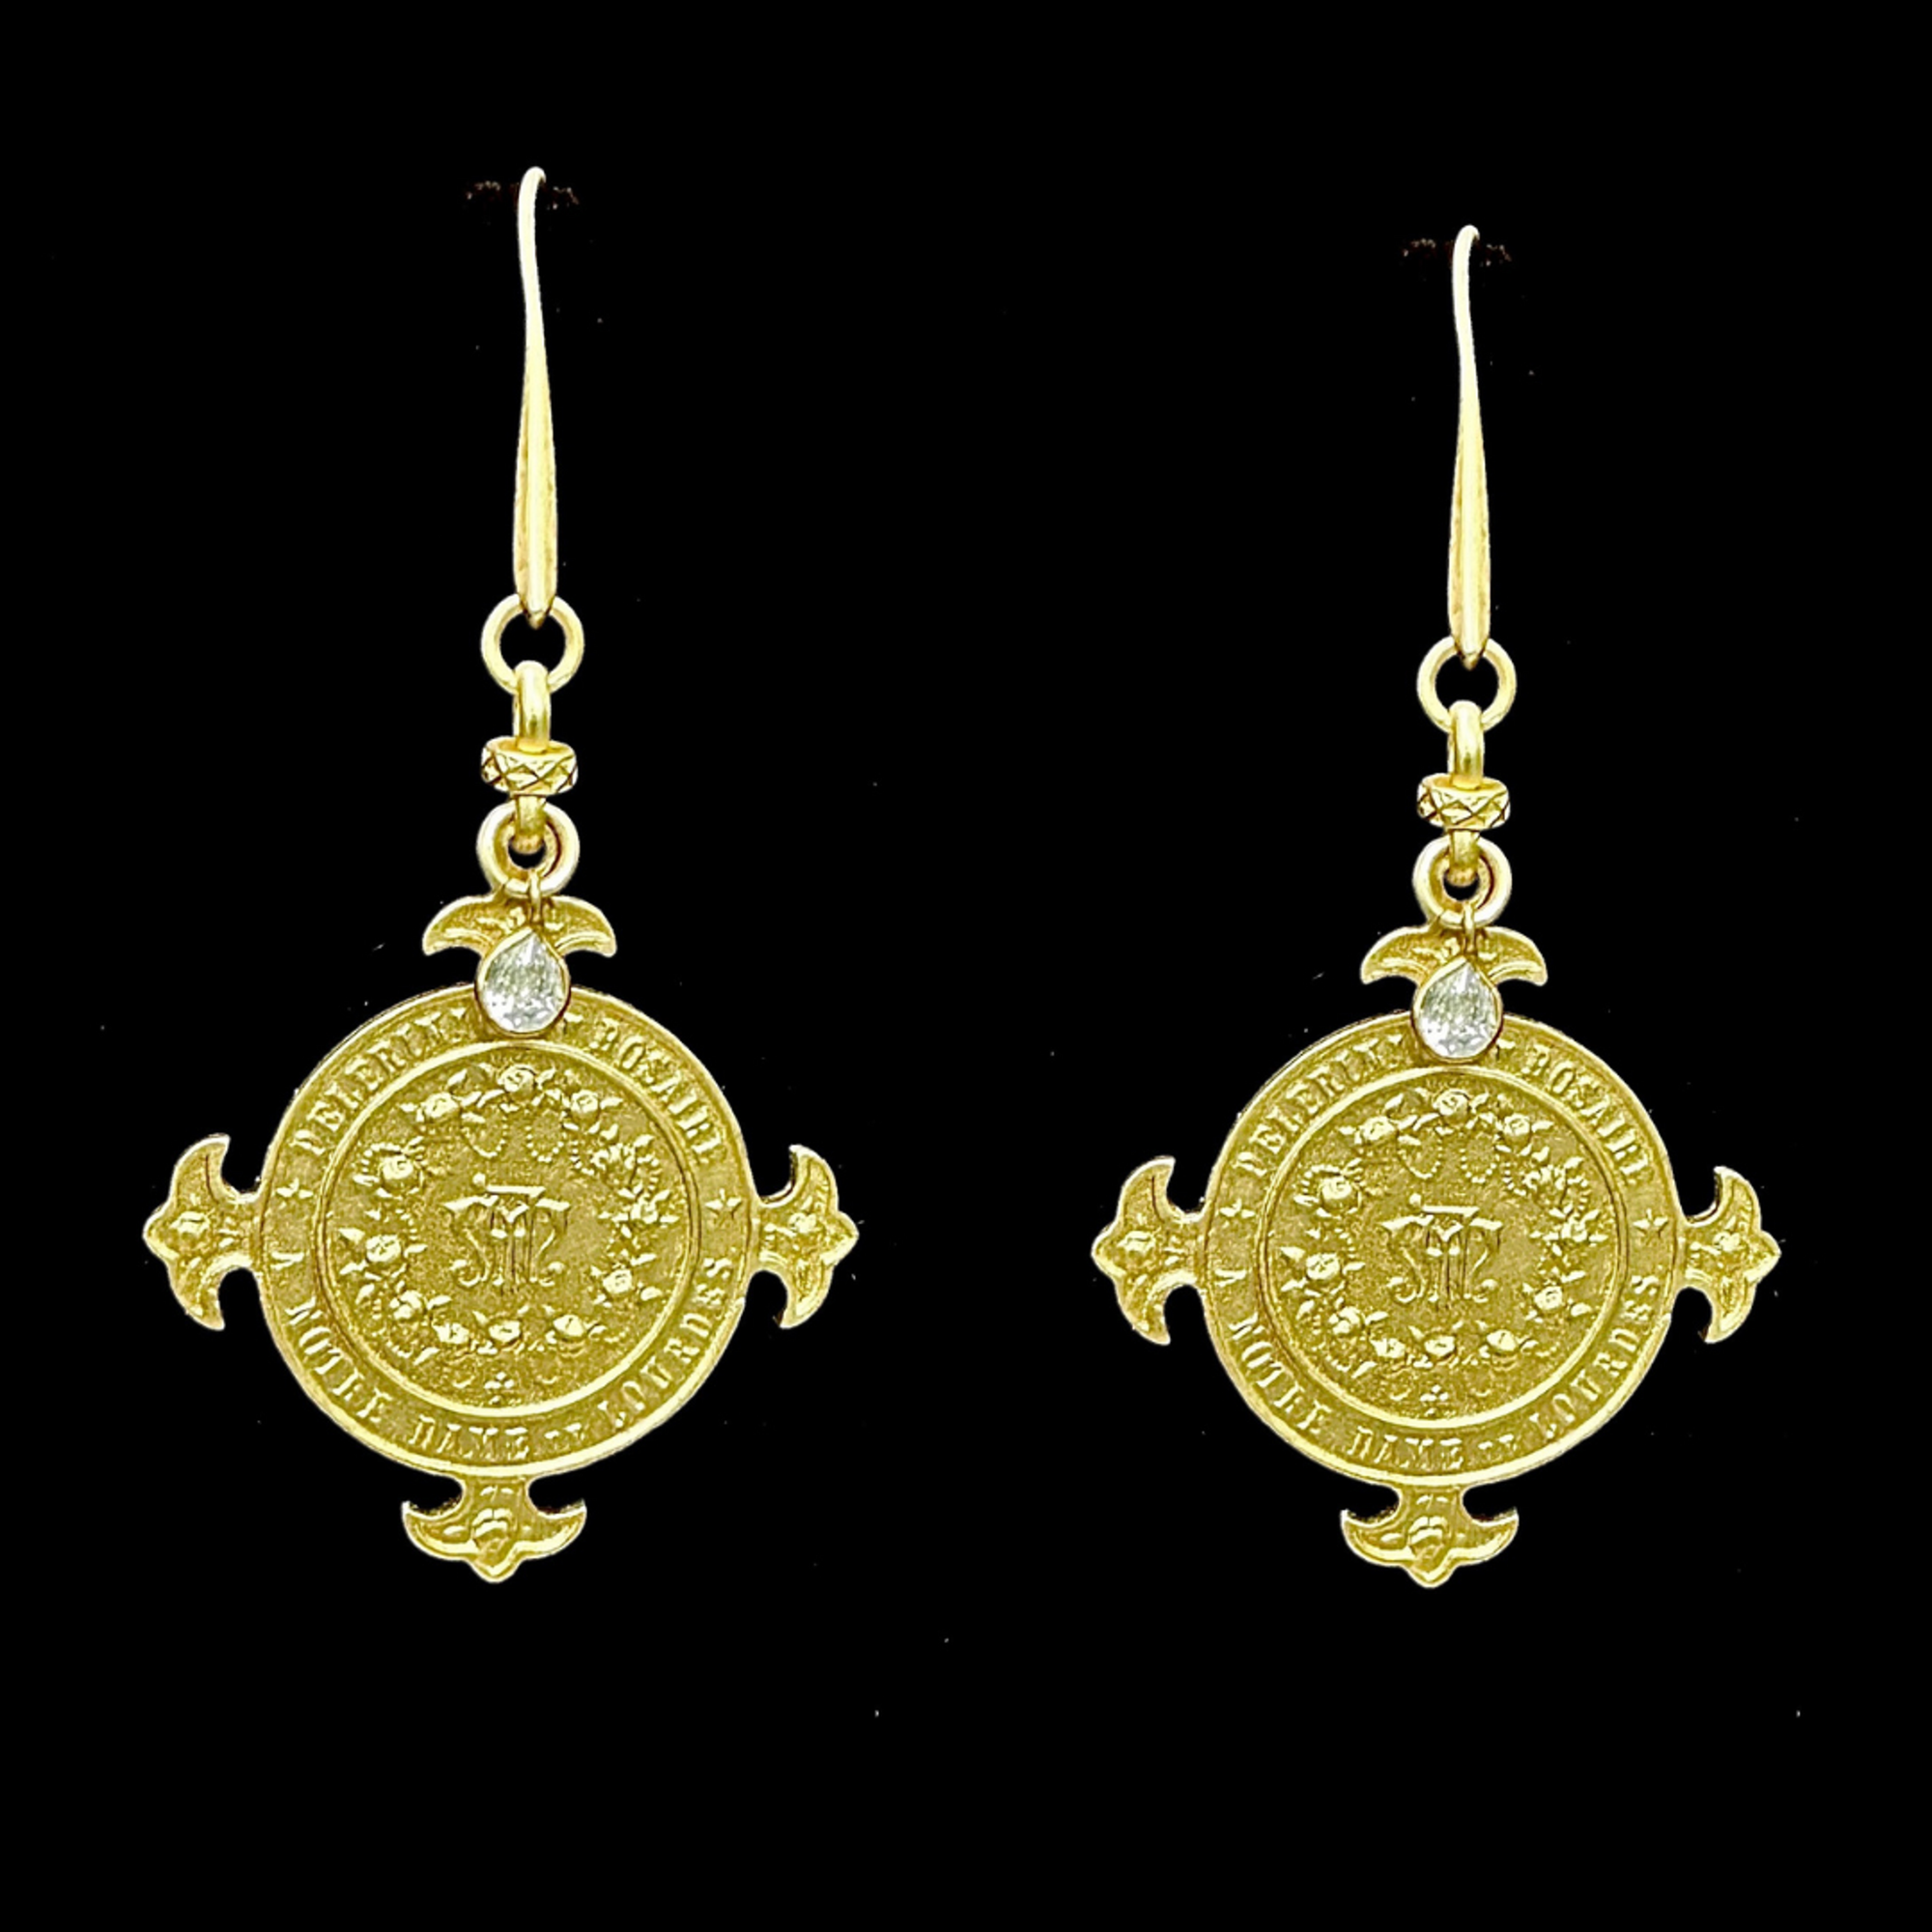 Lourdes Illumination Earrings in Gold